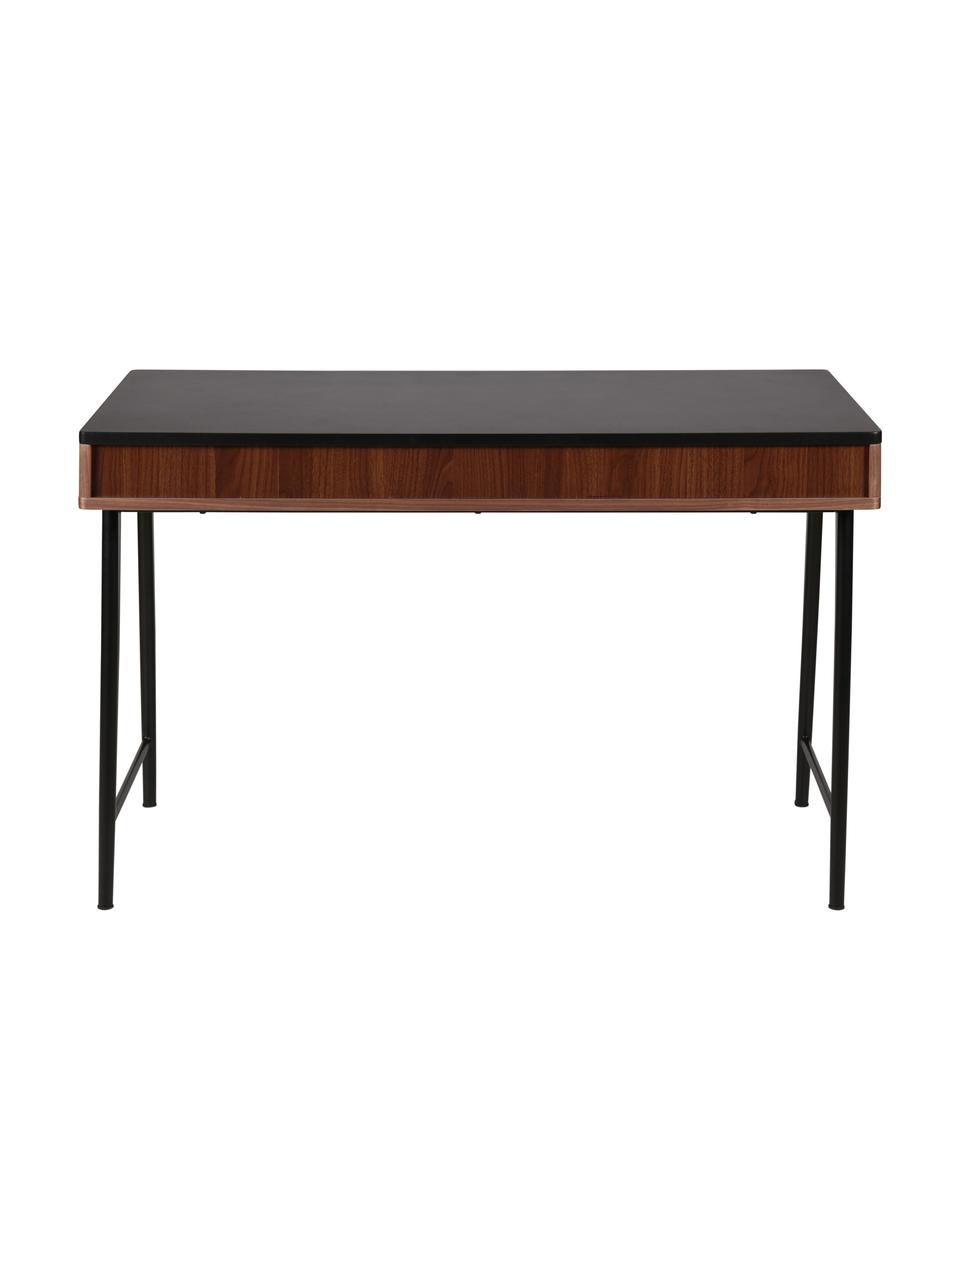 Bureau minimaliste Nuance, Brun, noir, larg. 120 x prof. 60 cm